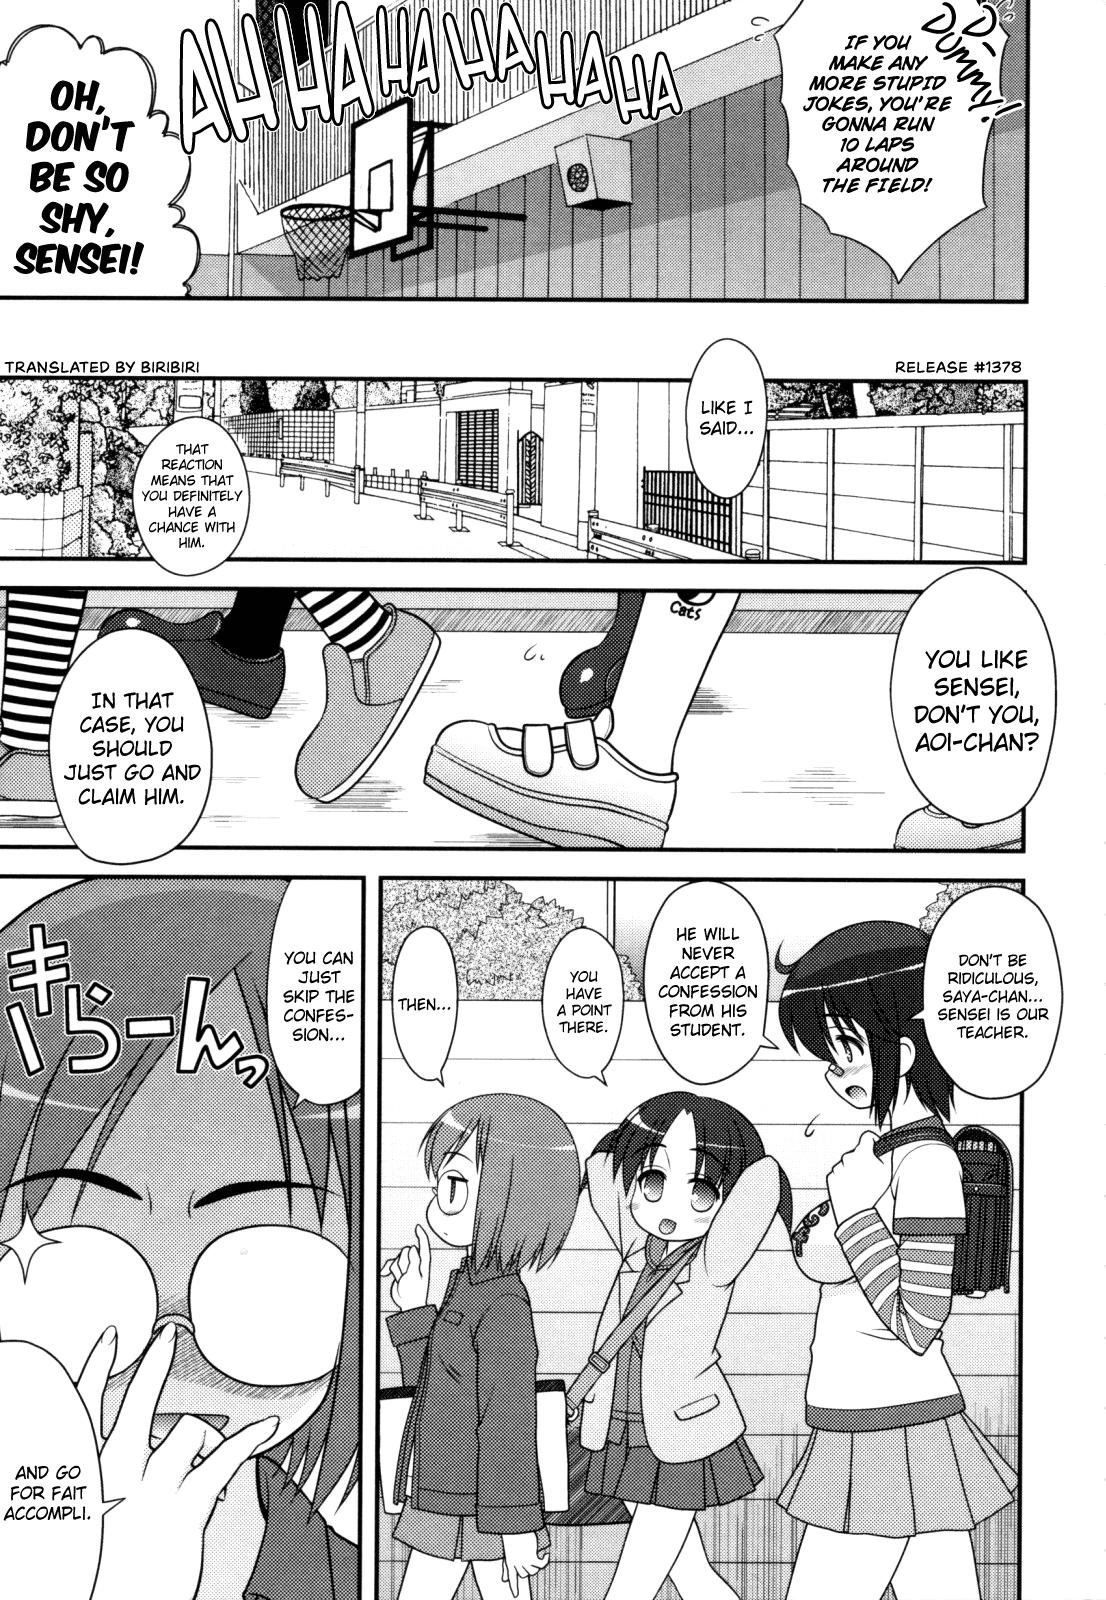 Classy Aoi-chan Attack! Closeup - Page 9